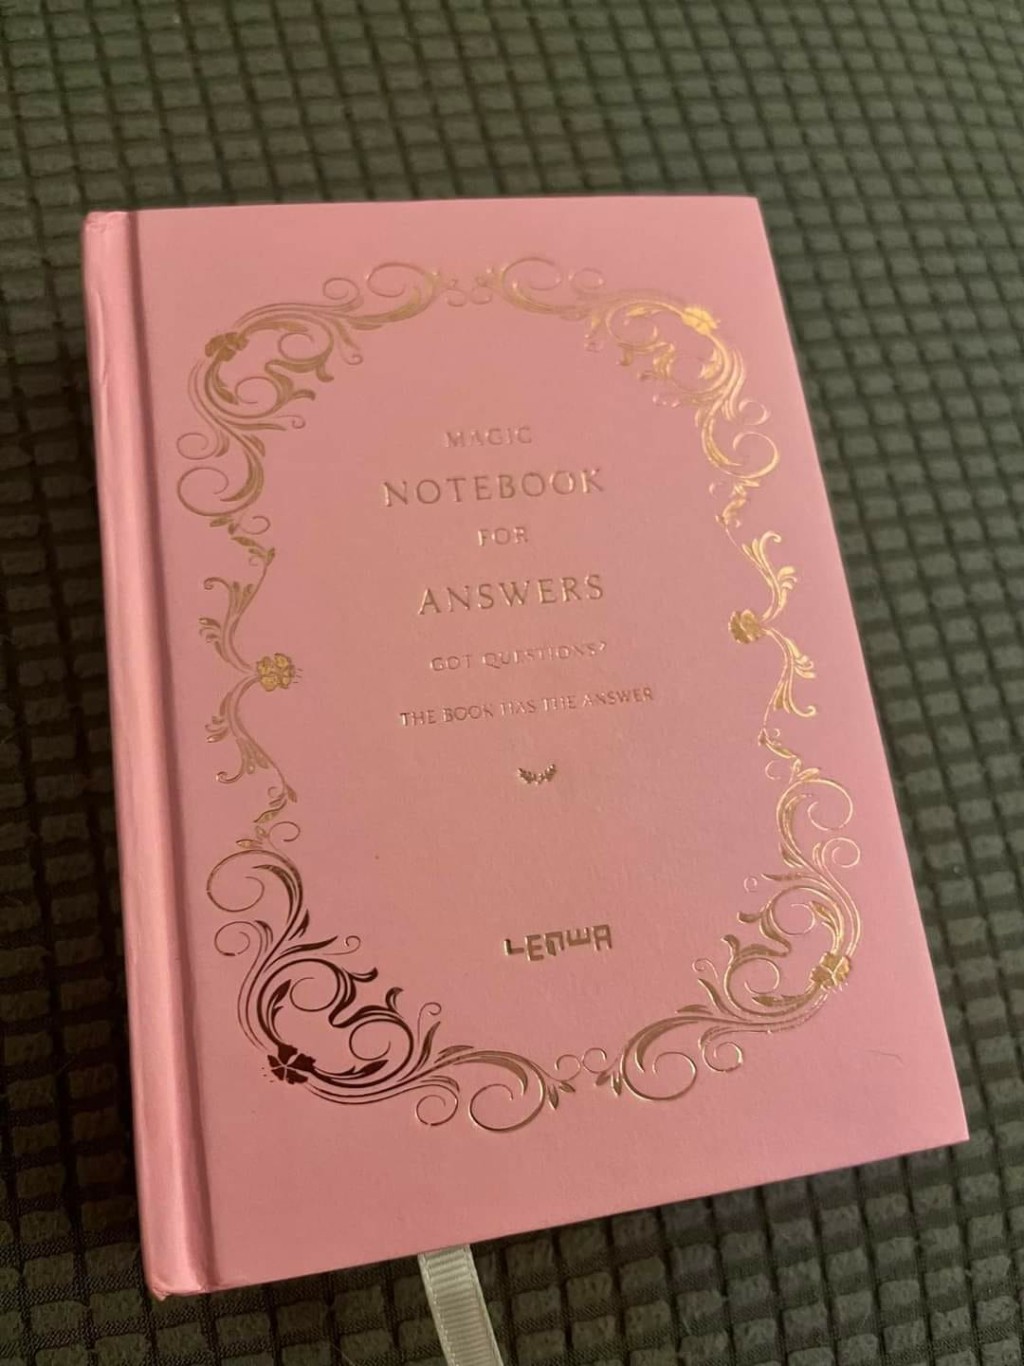 笔记簿上写有「Magic Notebook For Answers」的字样。淘宝开心share FB图片